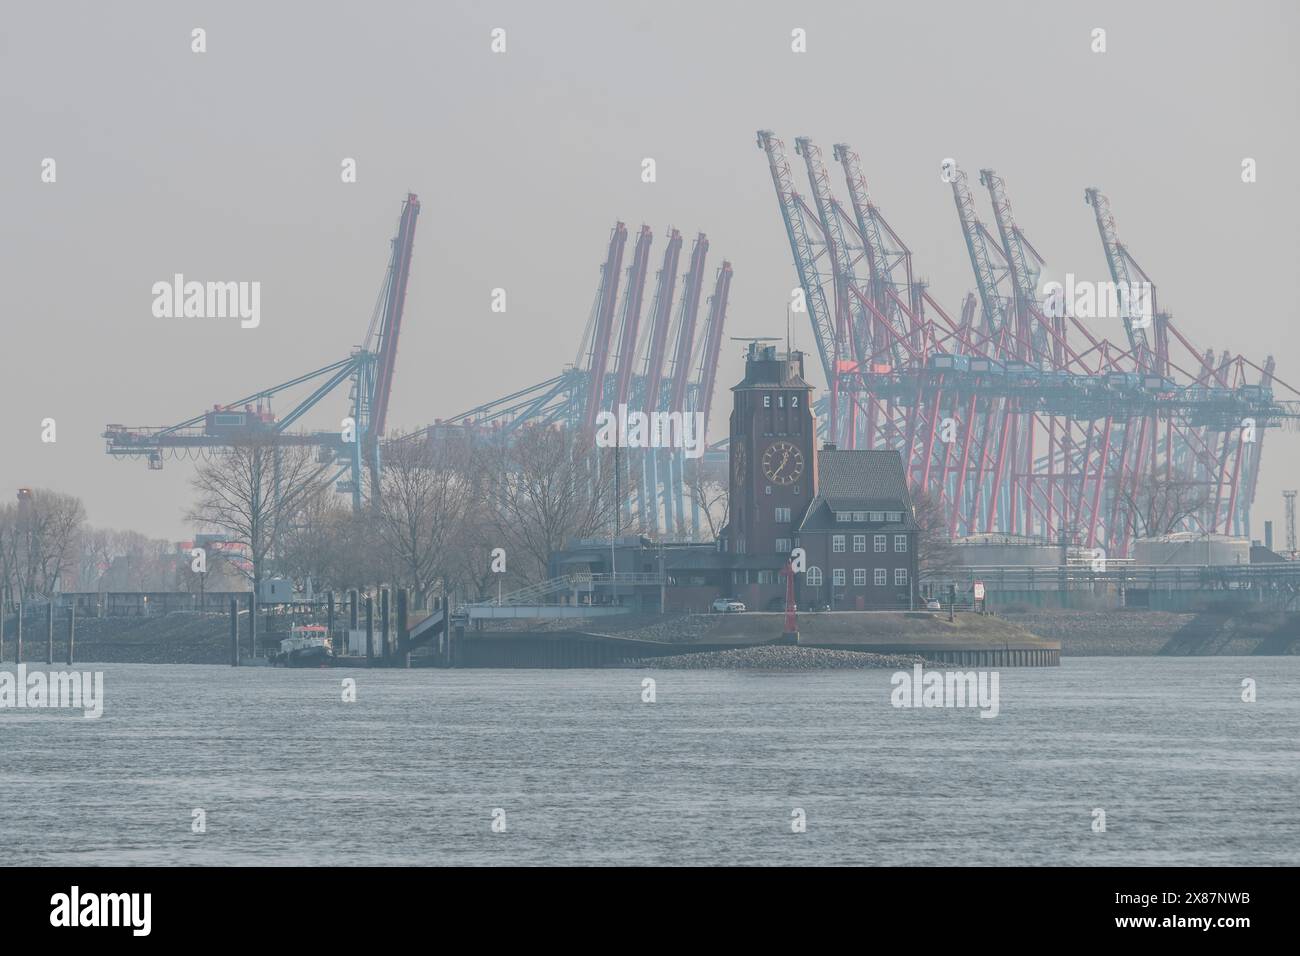 Germany, Hamburg, Lotsenhaus Seemannshoft with Port of Hamburg in background Stock Photo